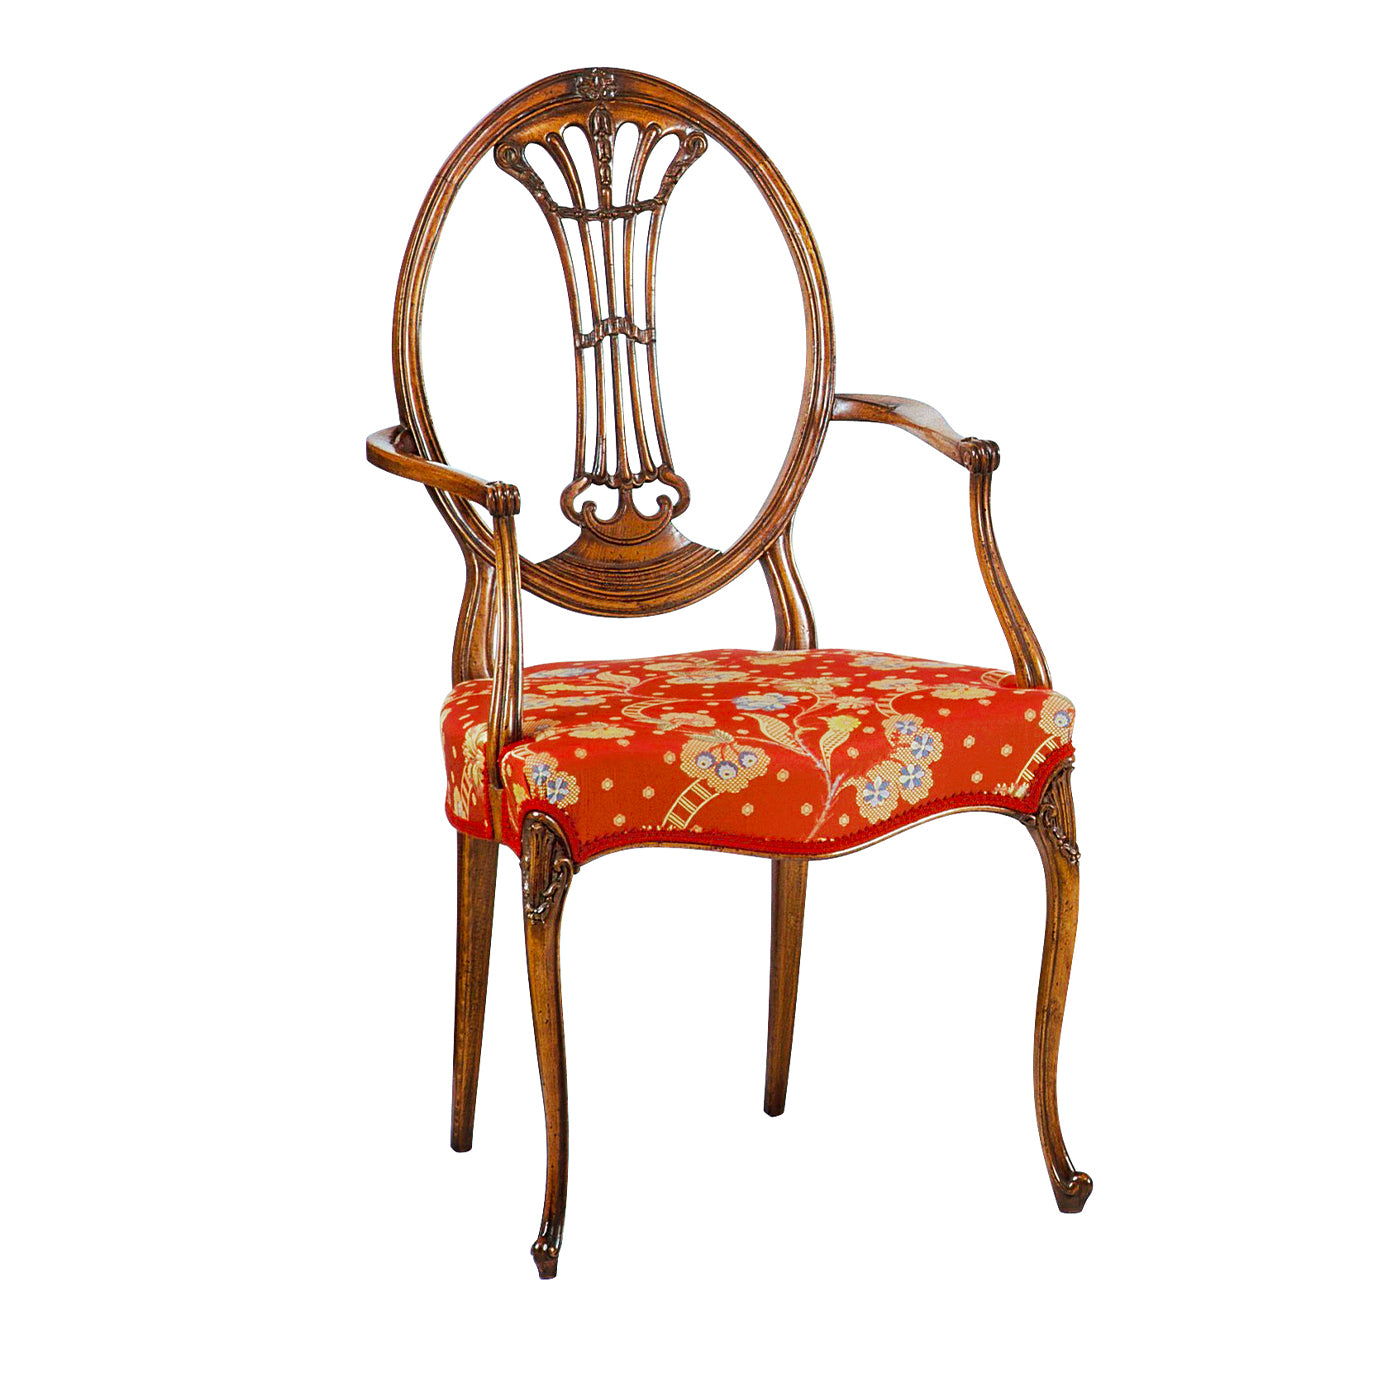 Hepplewhite-Style Red-Cushion Chair #1 - Alternative view 1